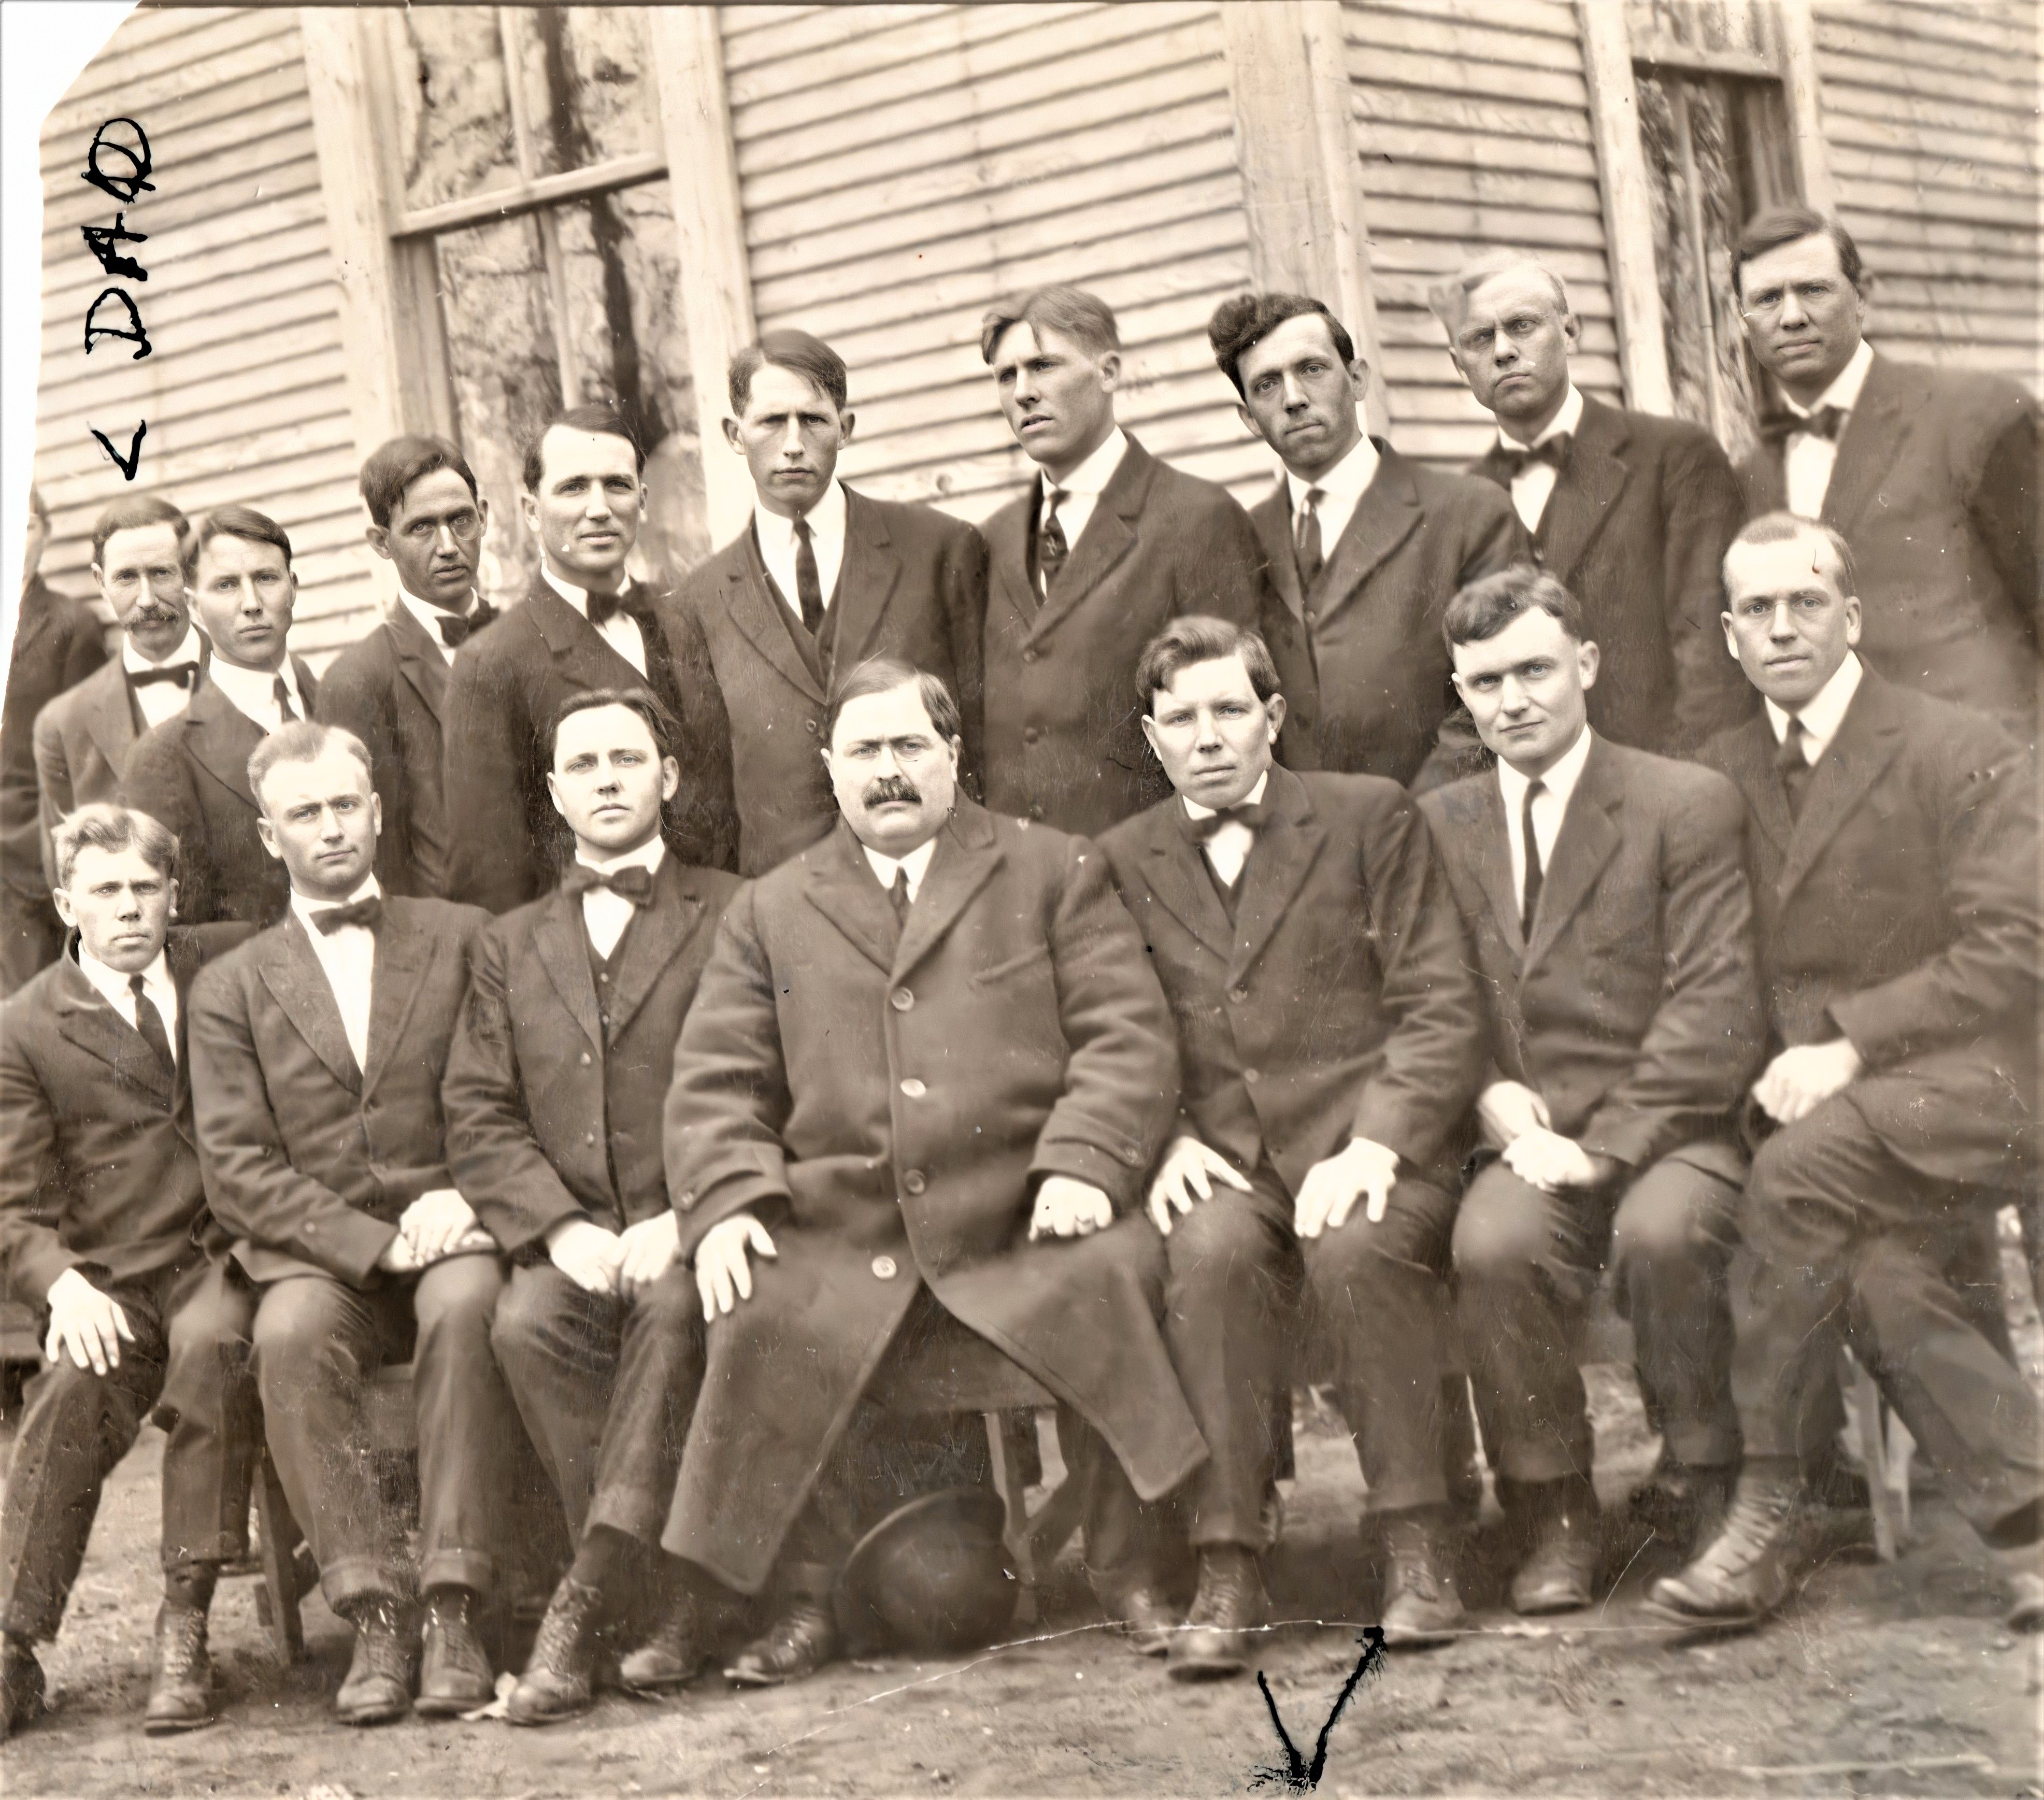 Barney Branch Conference - Arkansas, Circa 1916